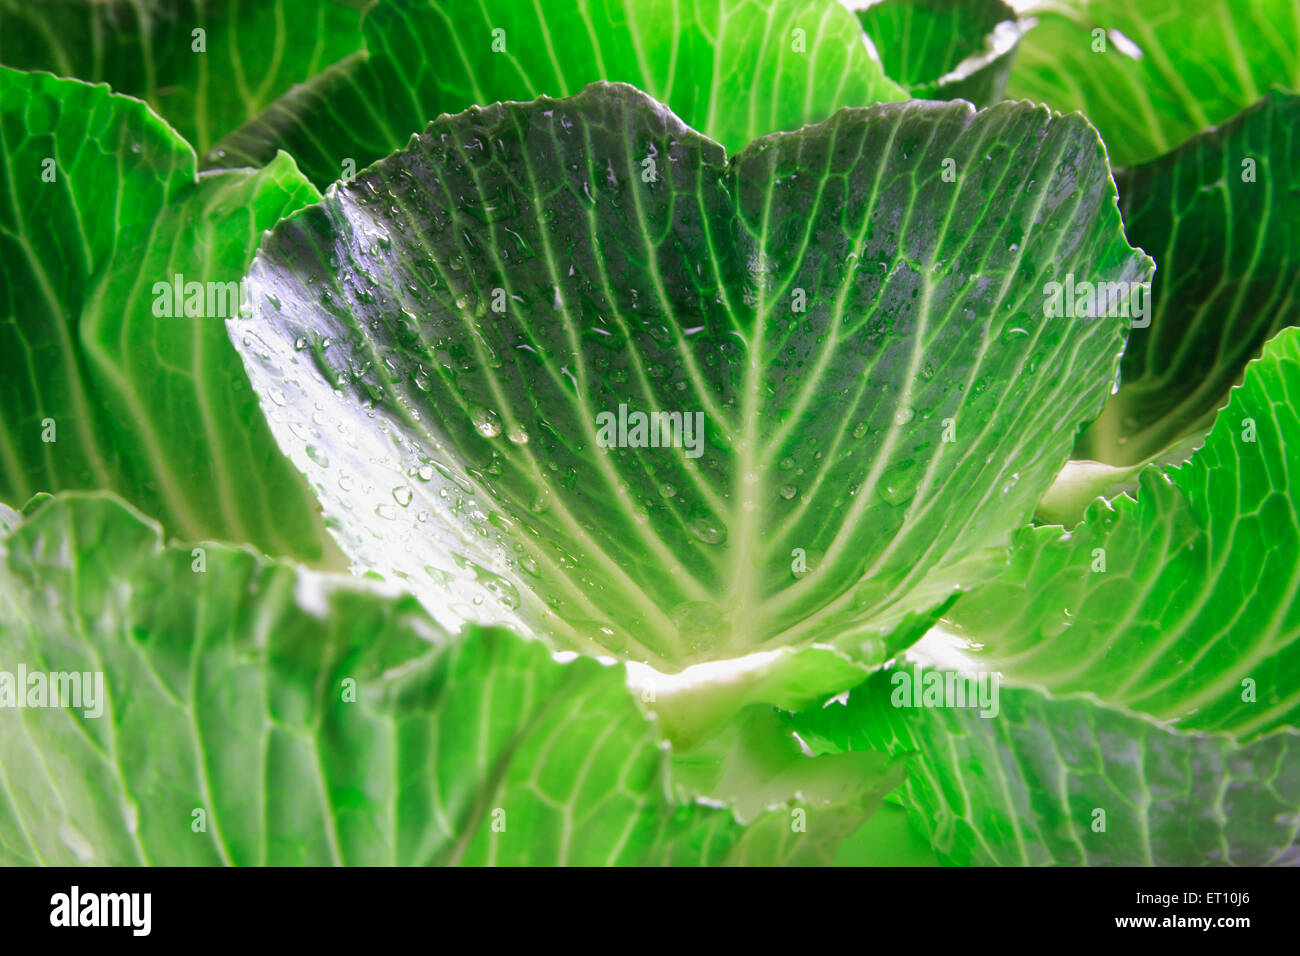 Vegetali verdi ; acqua scende su cavolo pattagobi Foto Stock